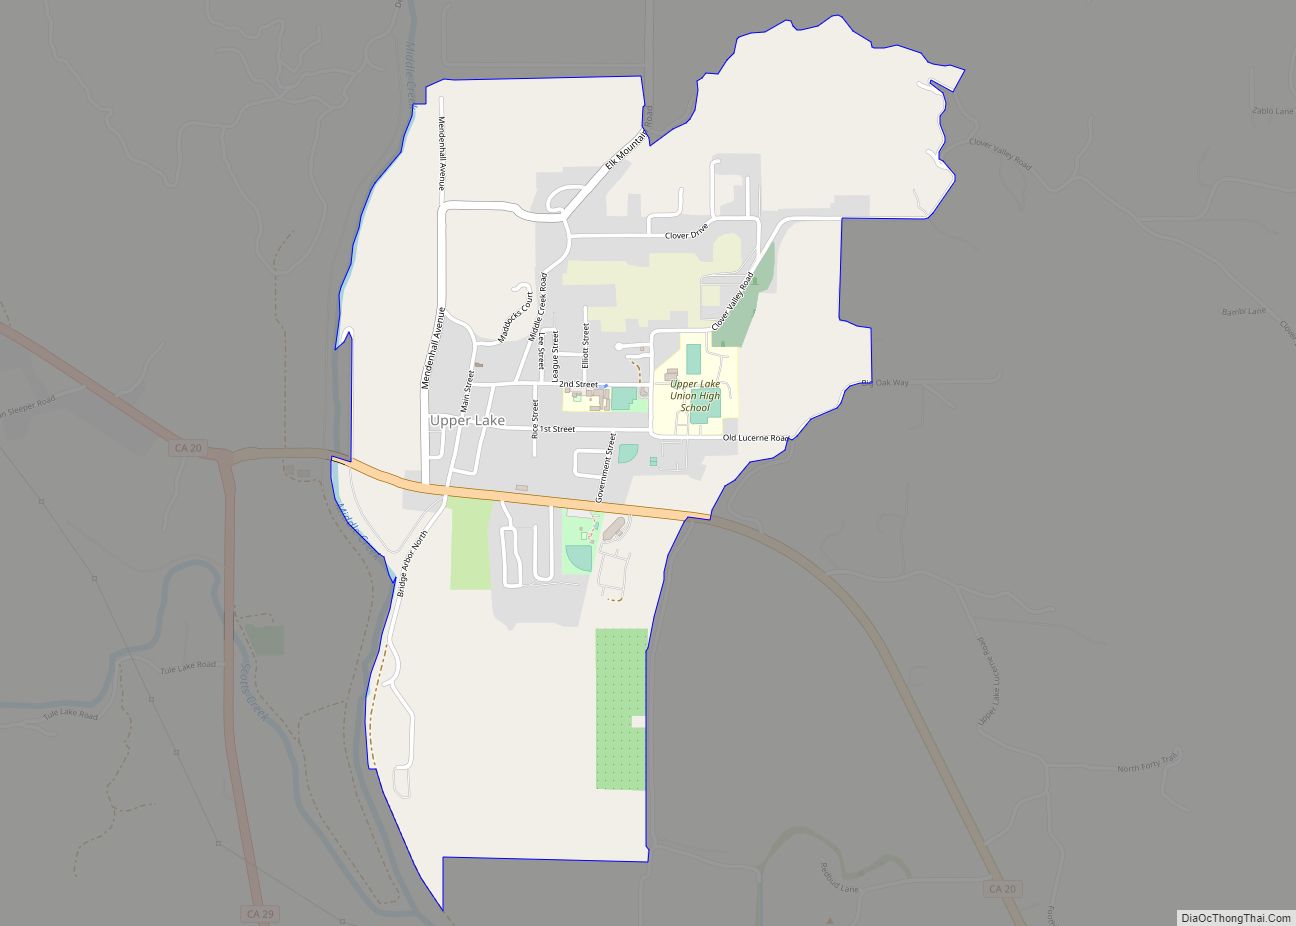 Map of Upper Lake CDP